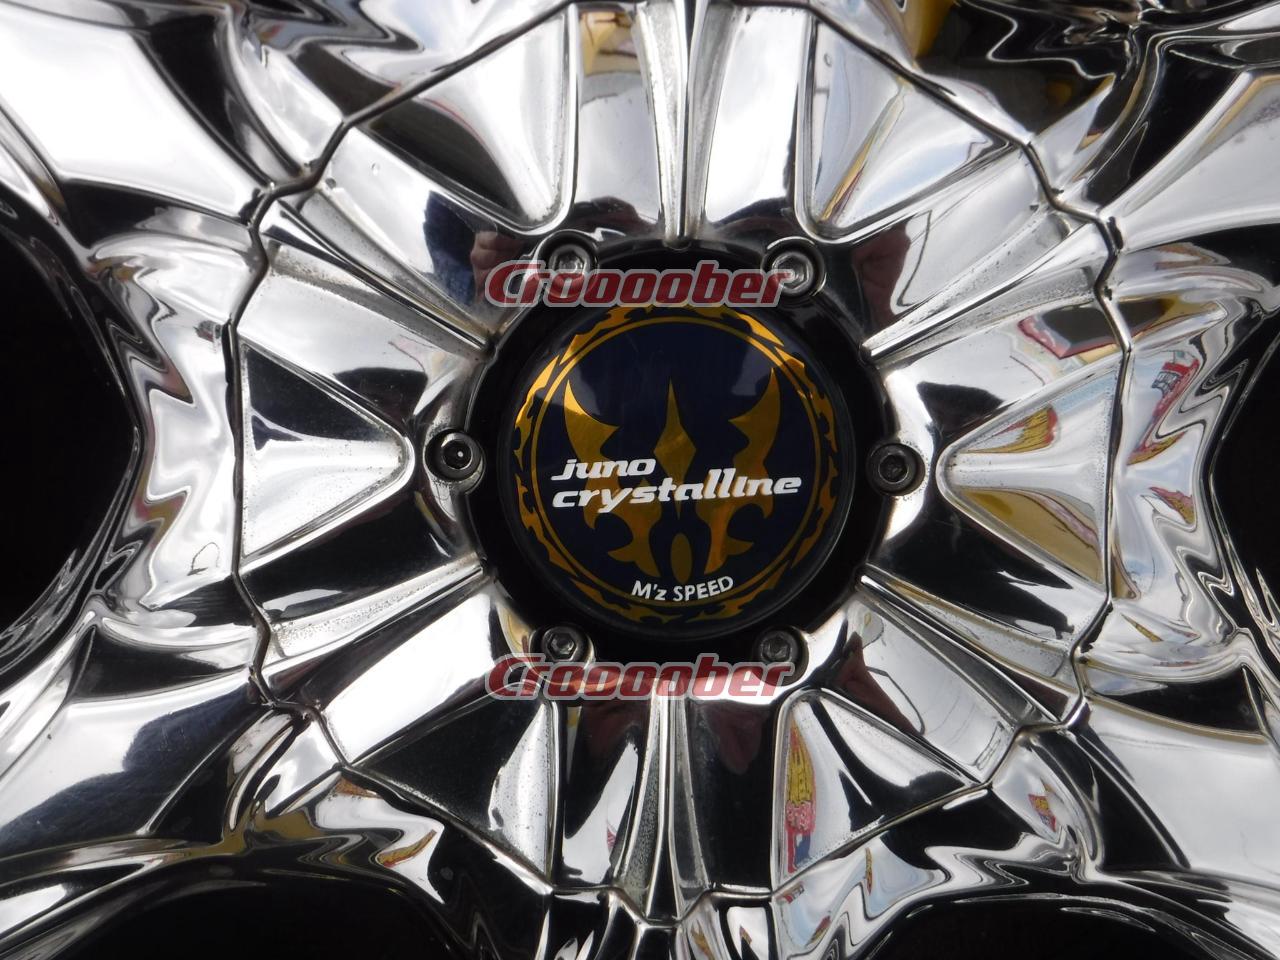 M'z MZ SPEED Juno Crystalline Extreme ZR 20 Inch Rim  Tire Sets for Sale  Croooober